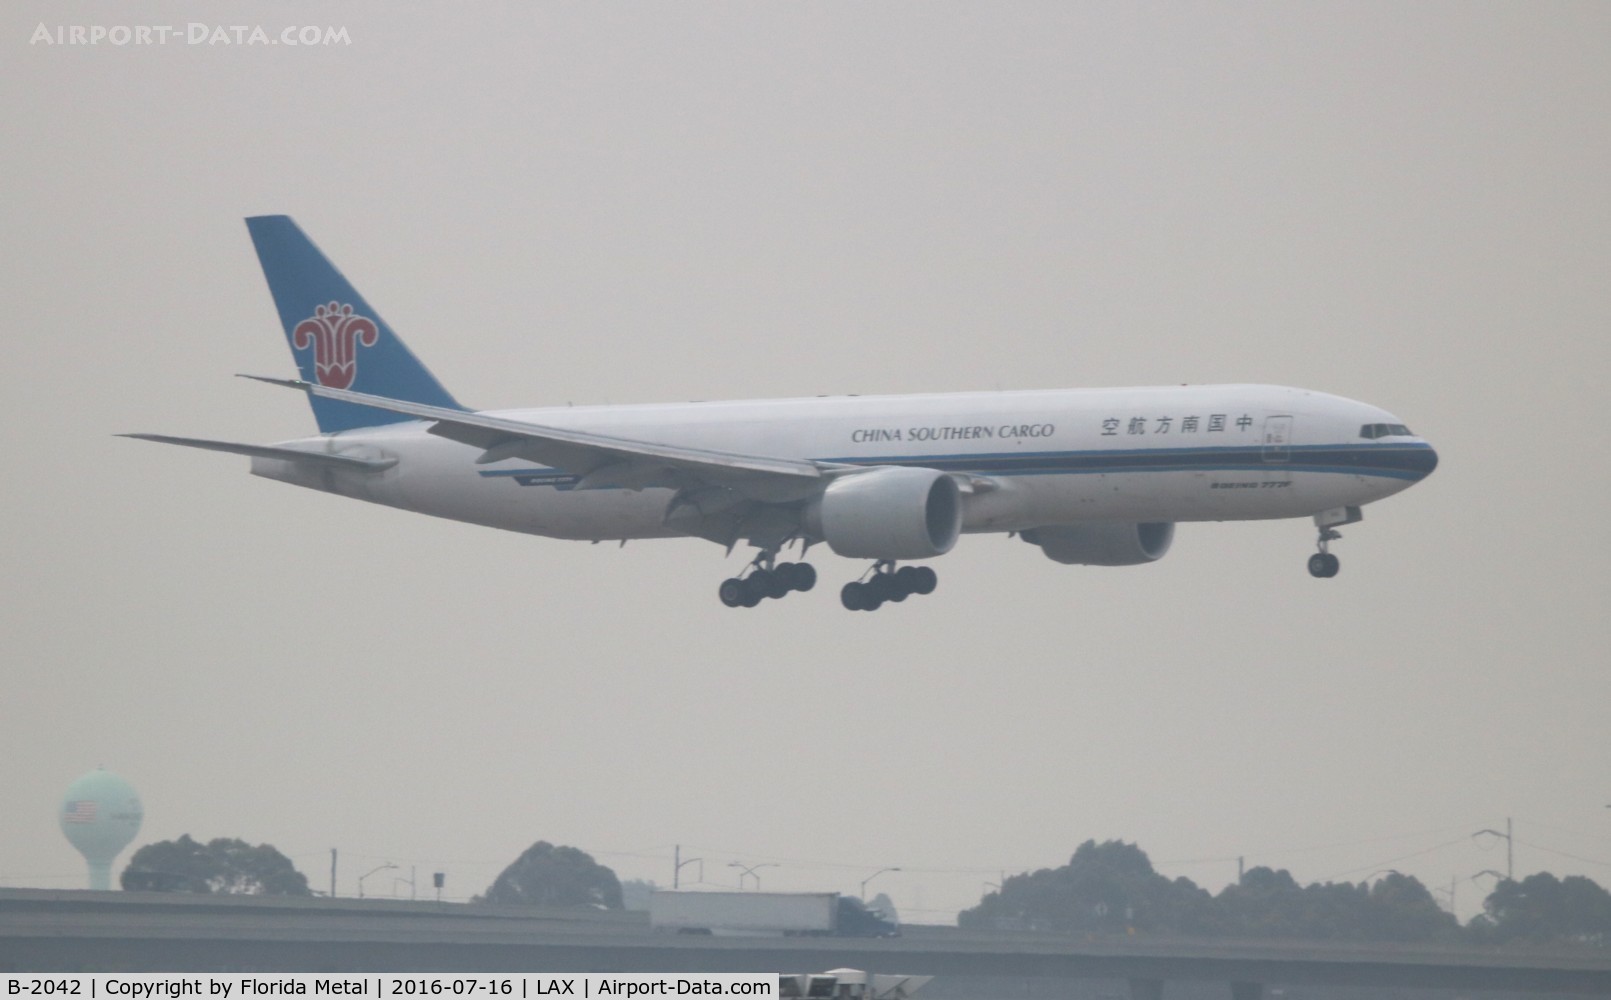 B-2042, 2013 Boeing 777-F1B C/N 41633, China Southern Cargo